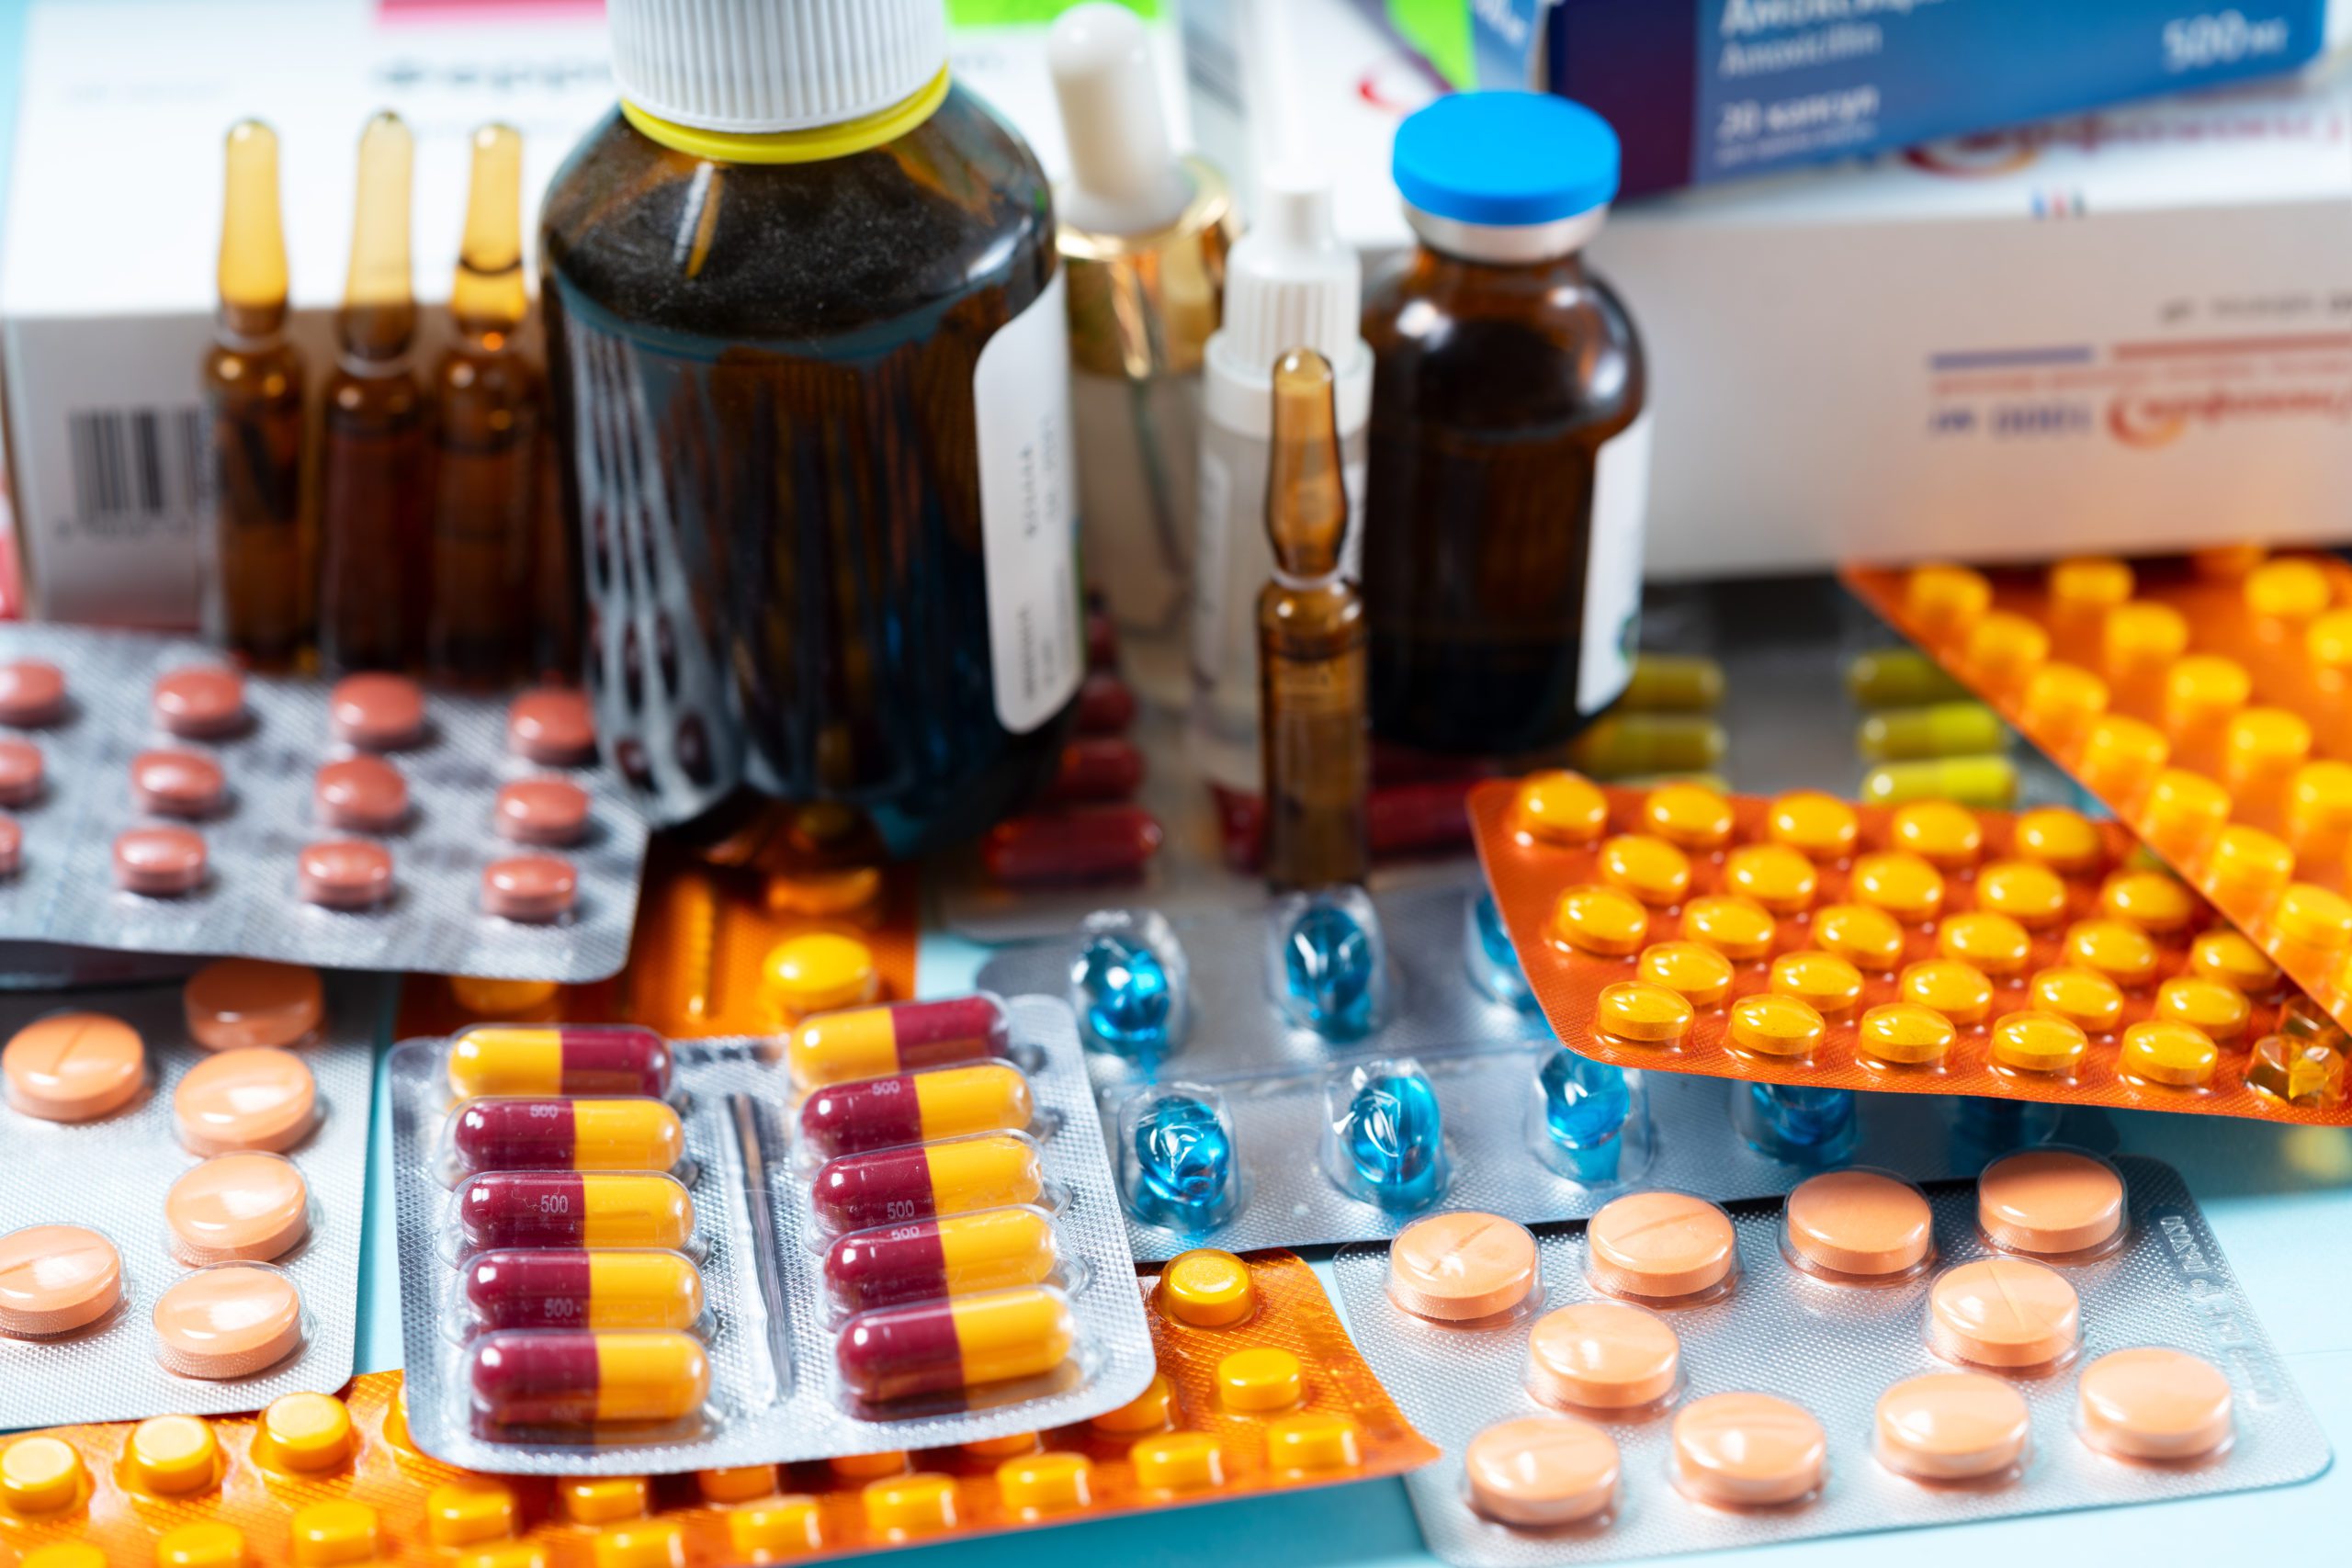 How Does Prescription Drug Abuse Start?